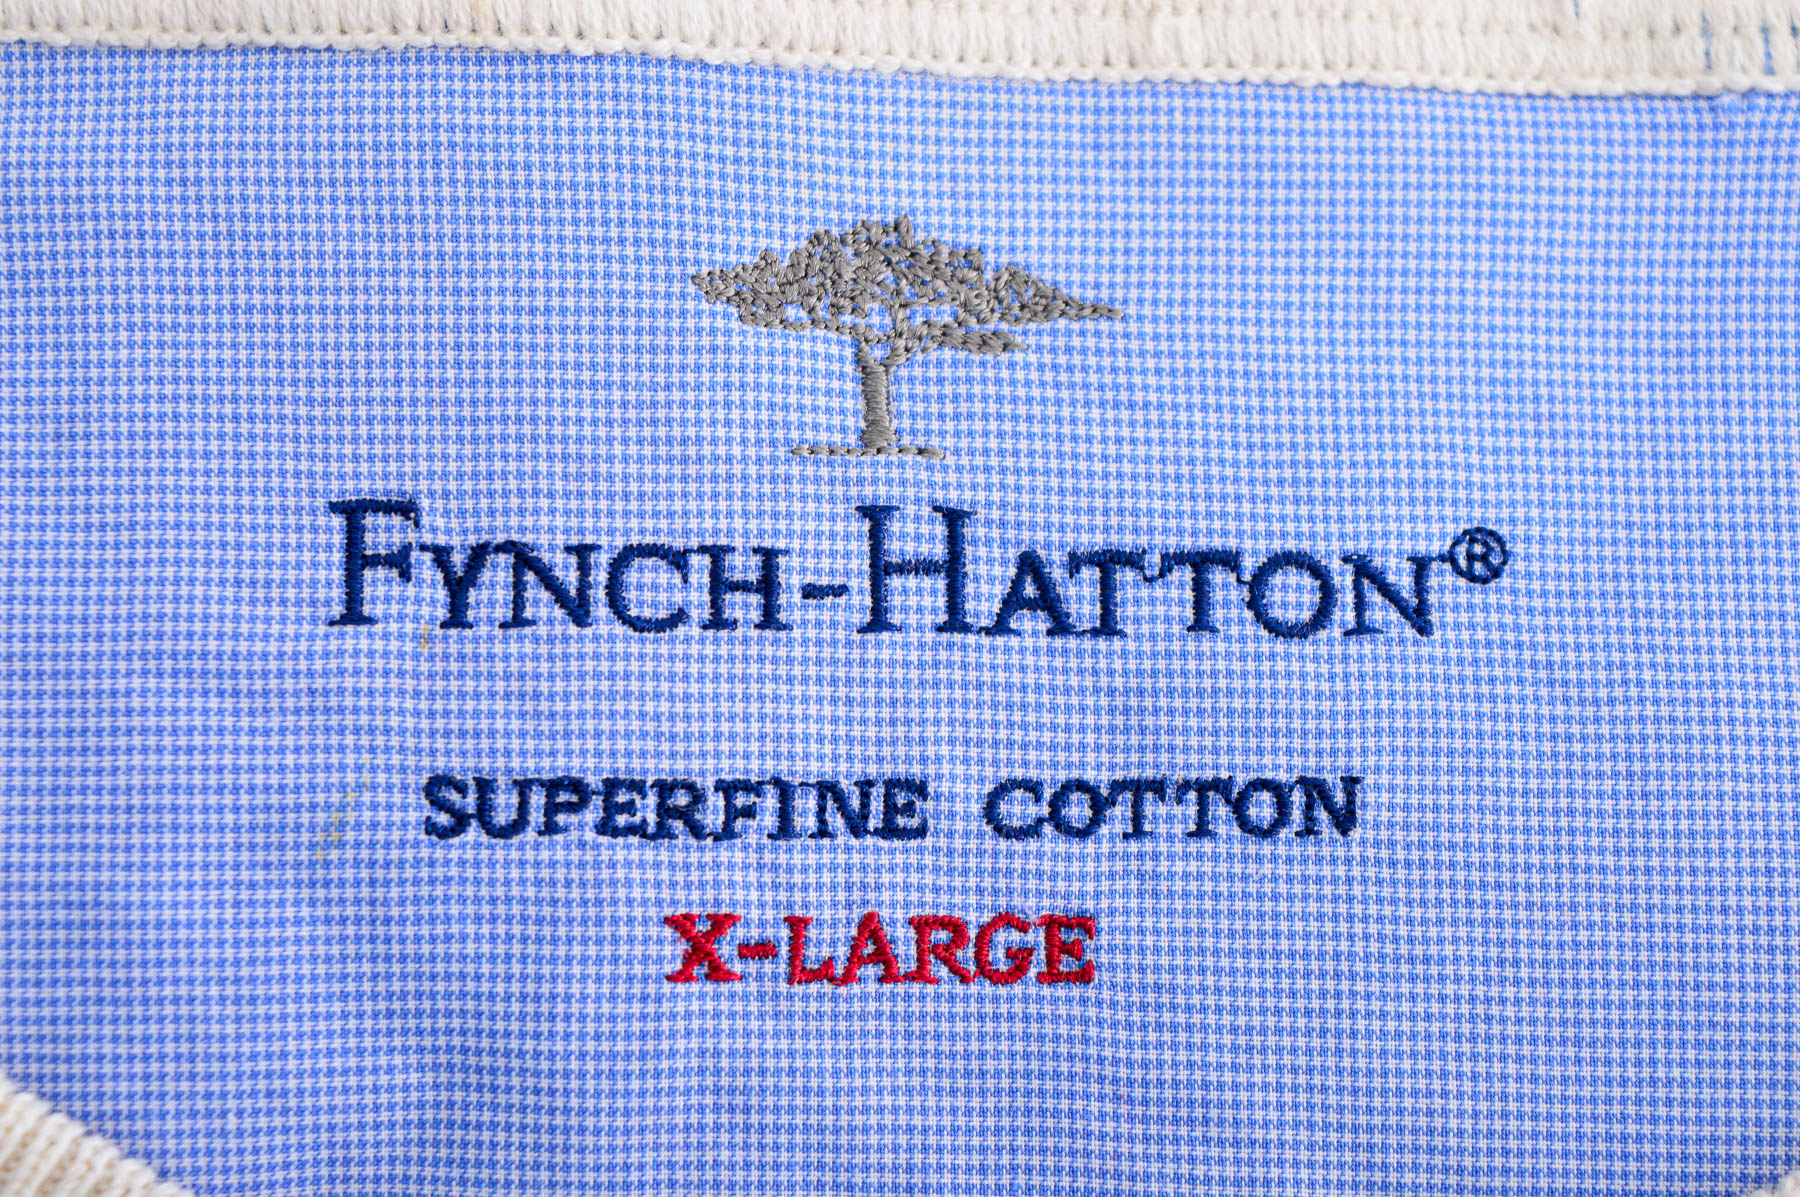 Men's sweater - Fynch Hatton - 2